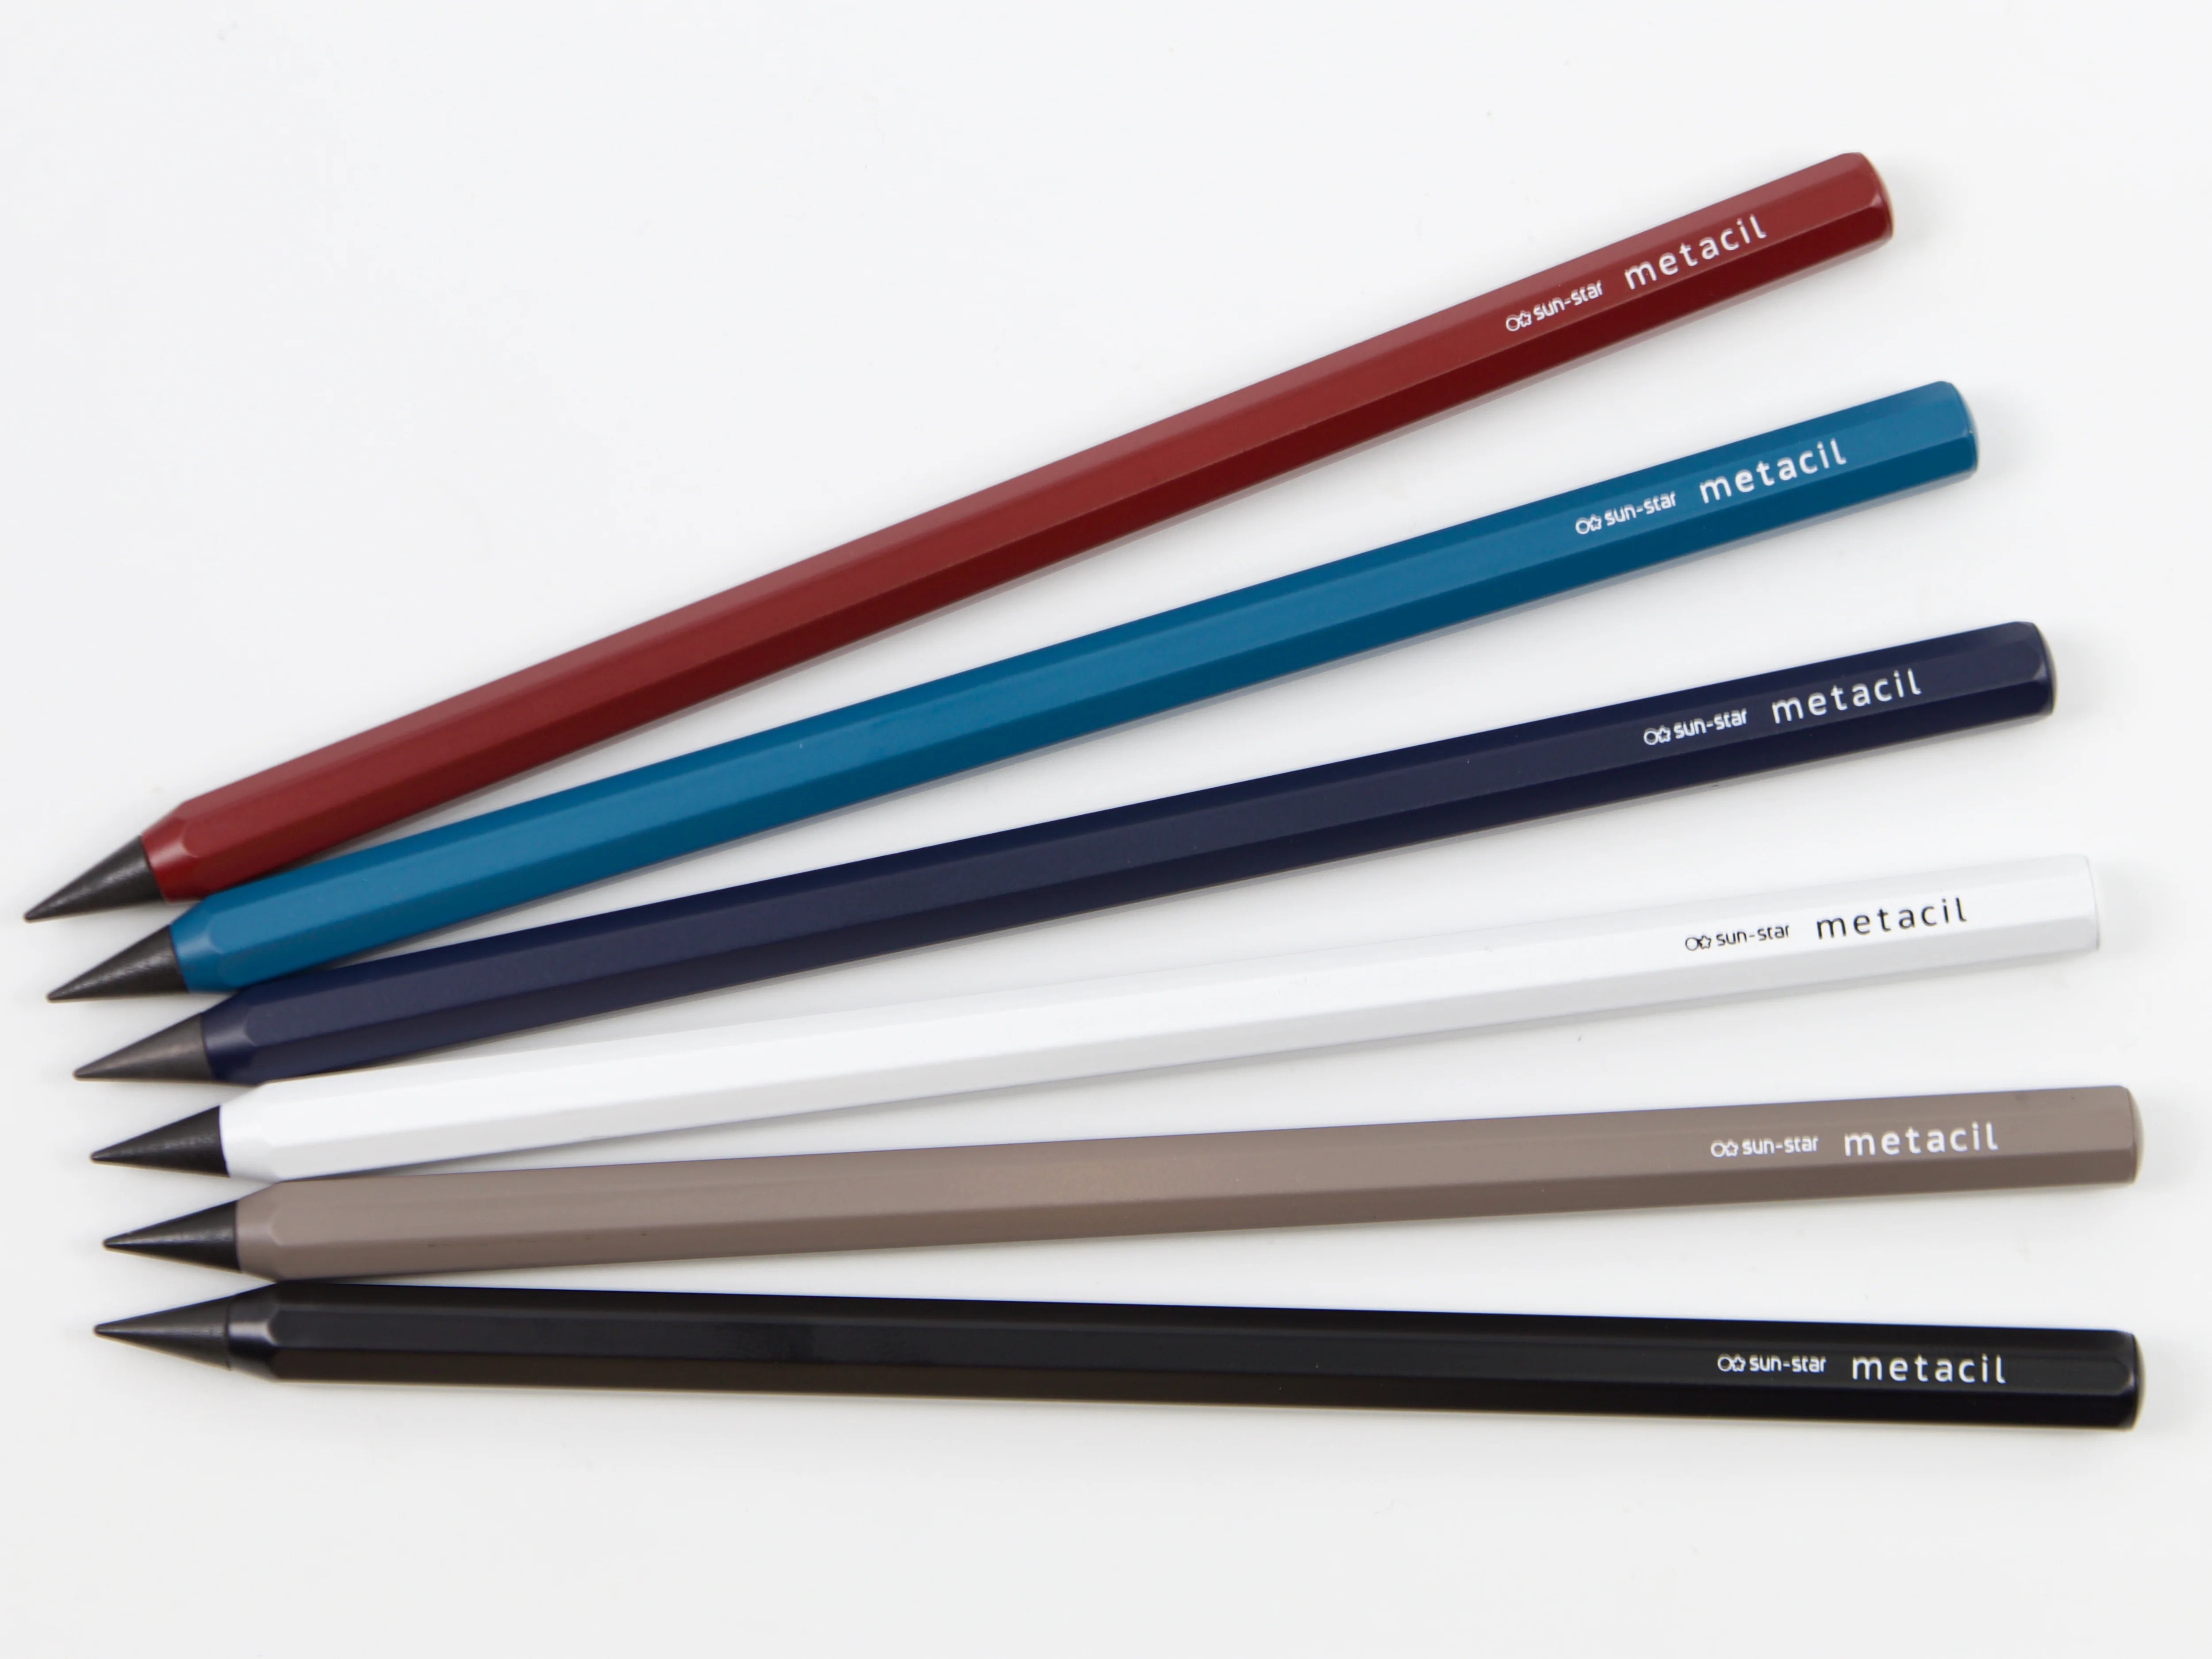 Sunstar Stationery Metal Pencil, Metacil, Blue, S4541170 